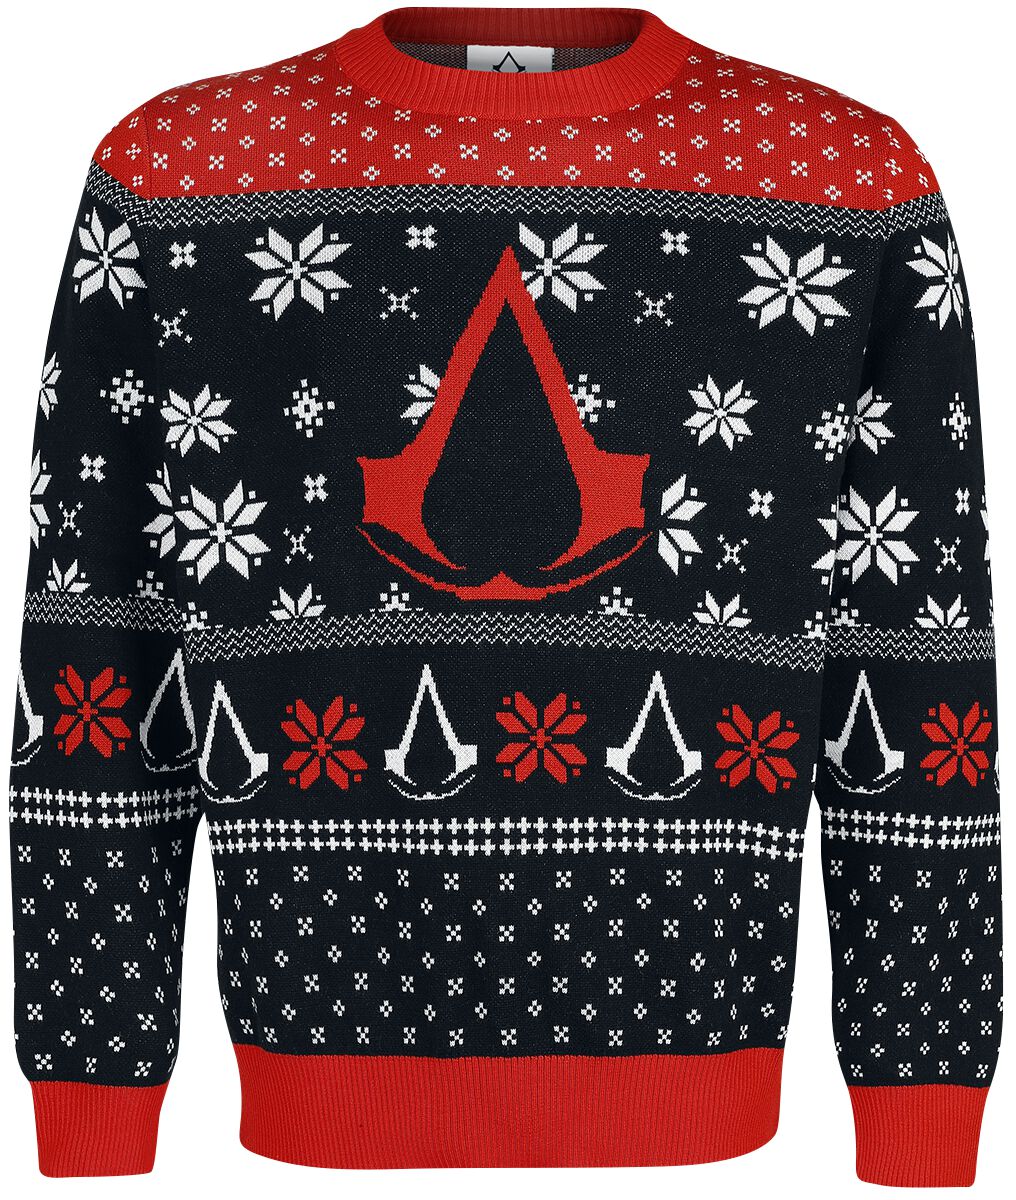 Assassin's Creed Christmas Jumper Christmas jumper multicolour